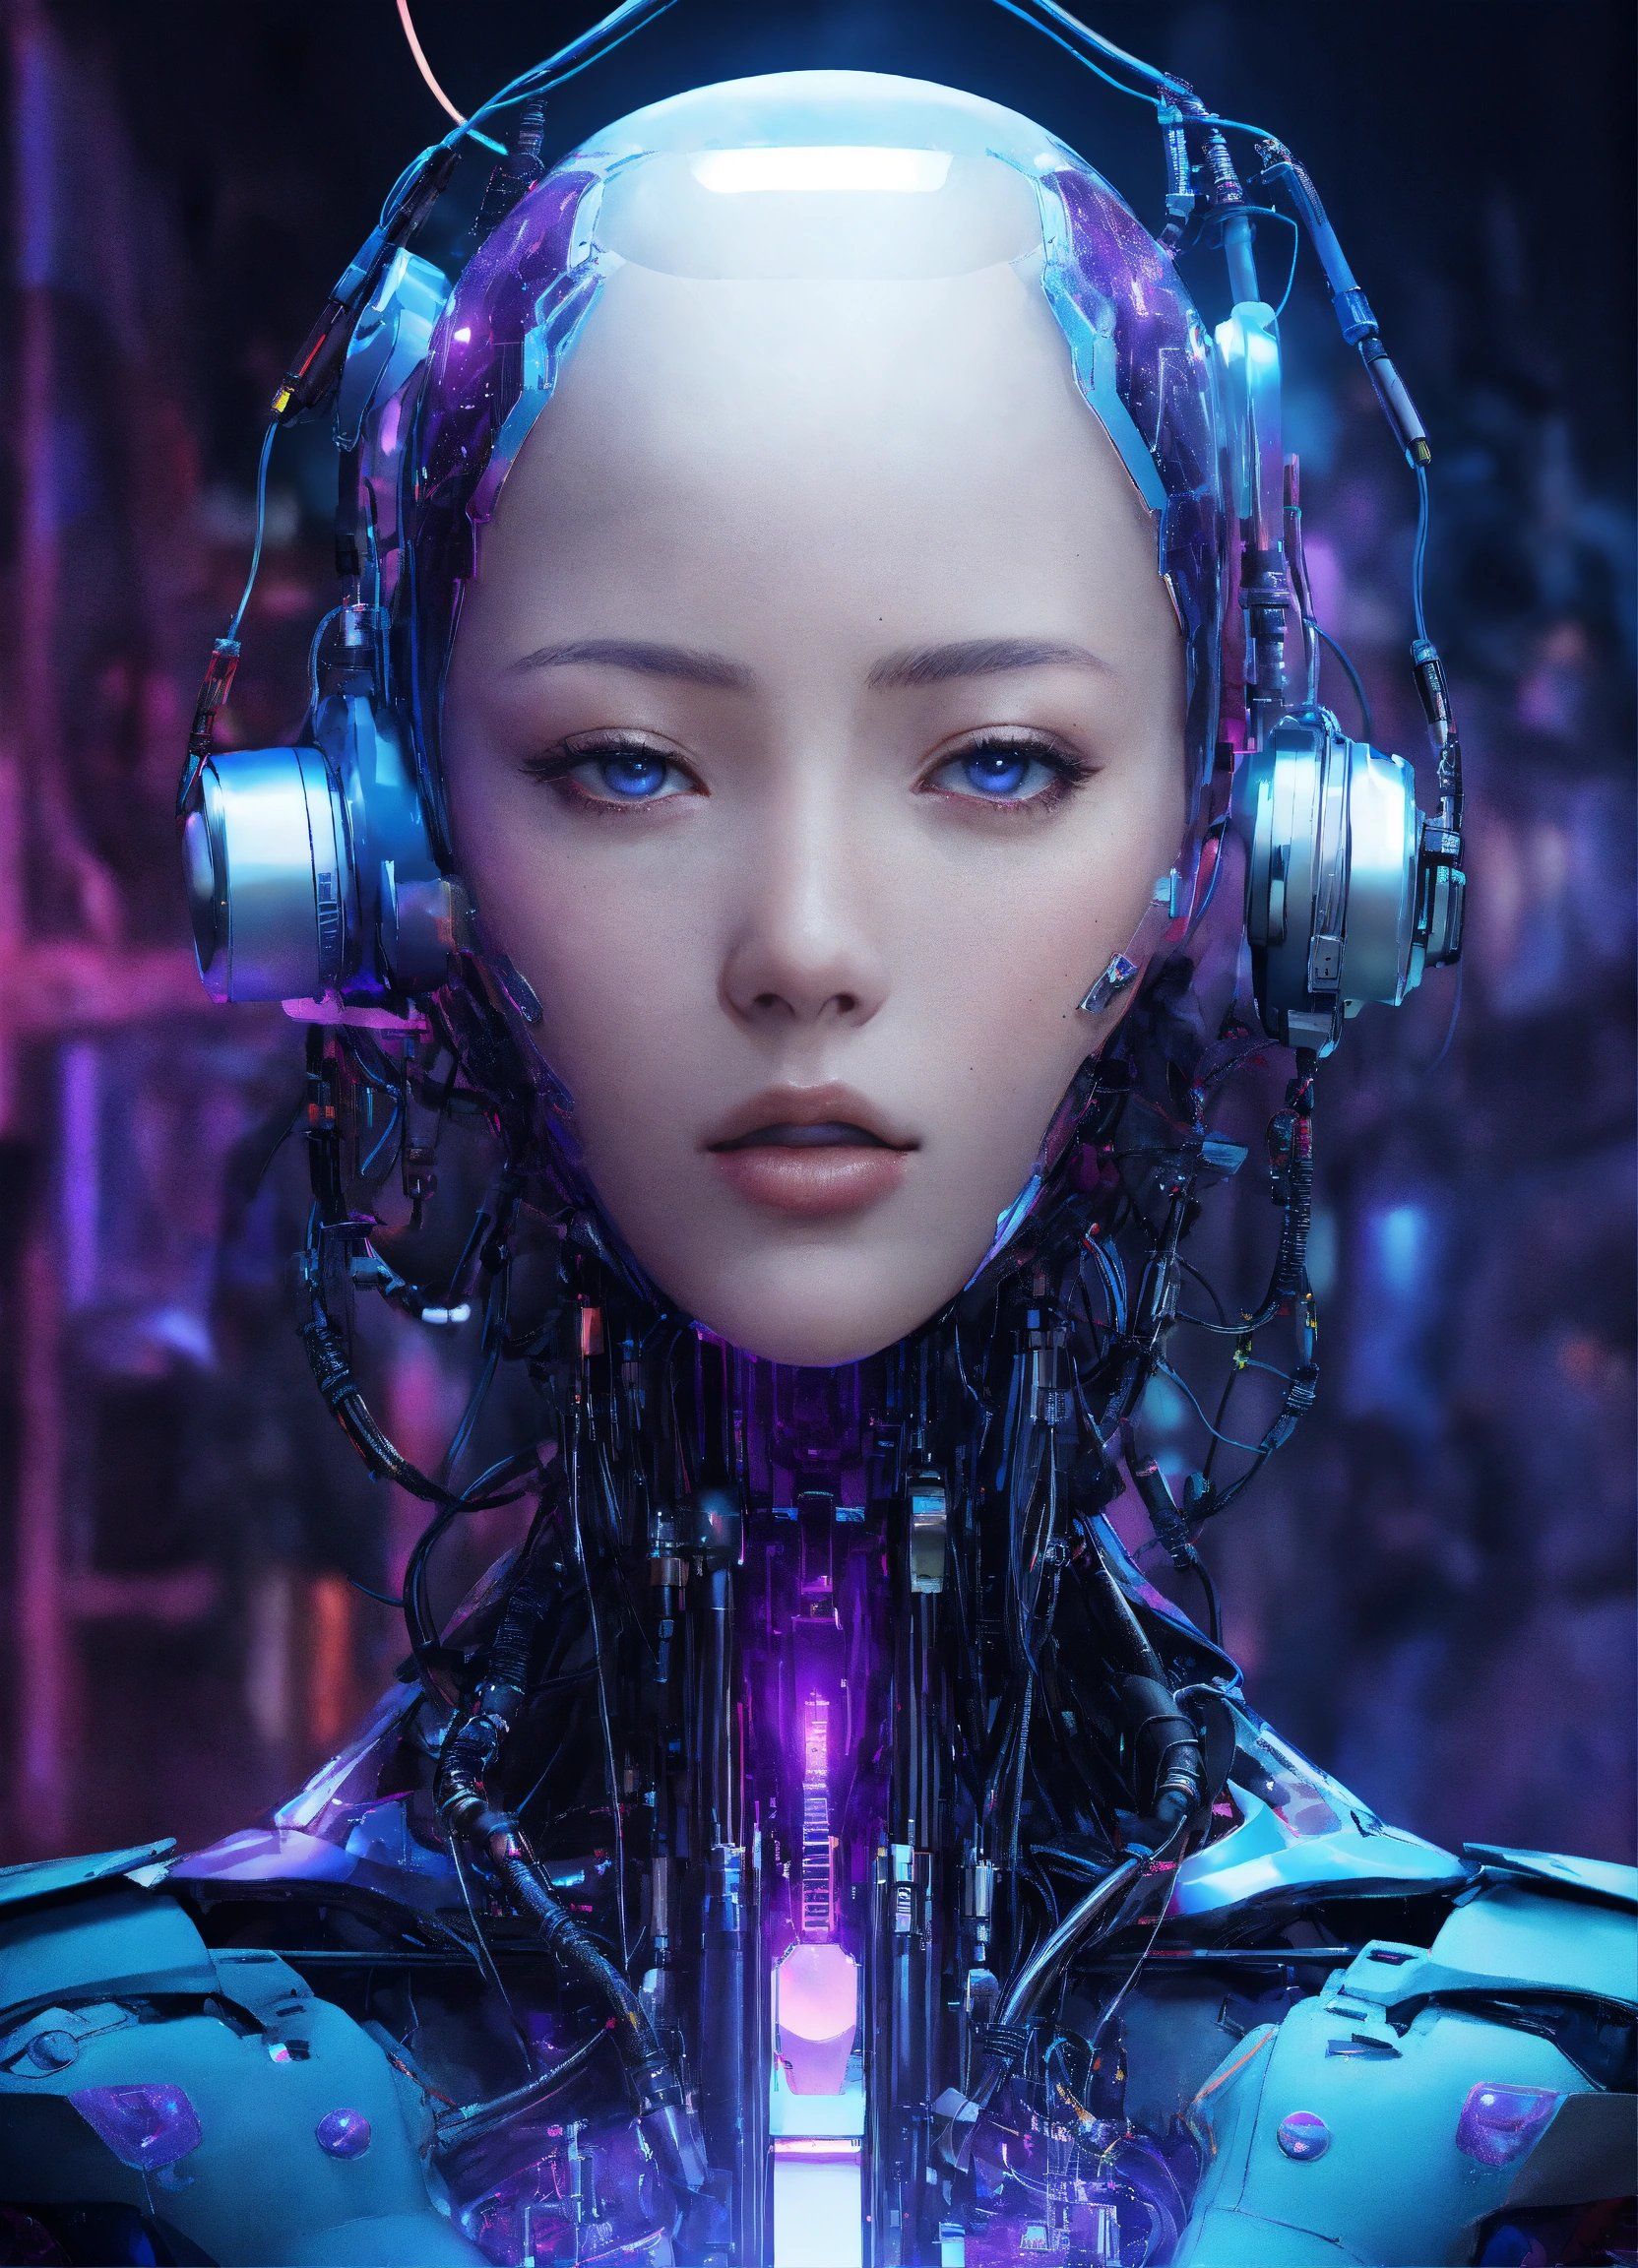 Exploring Machines and Robots' Minds